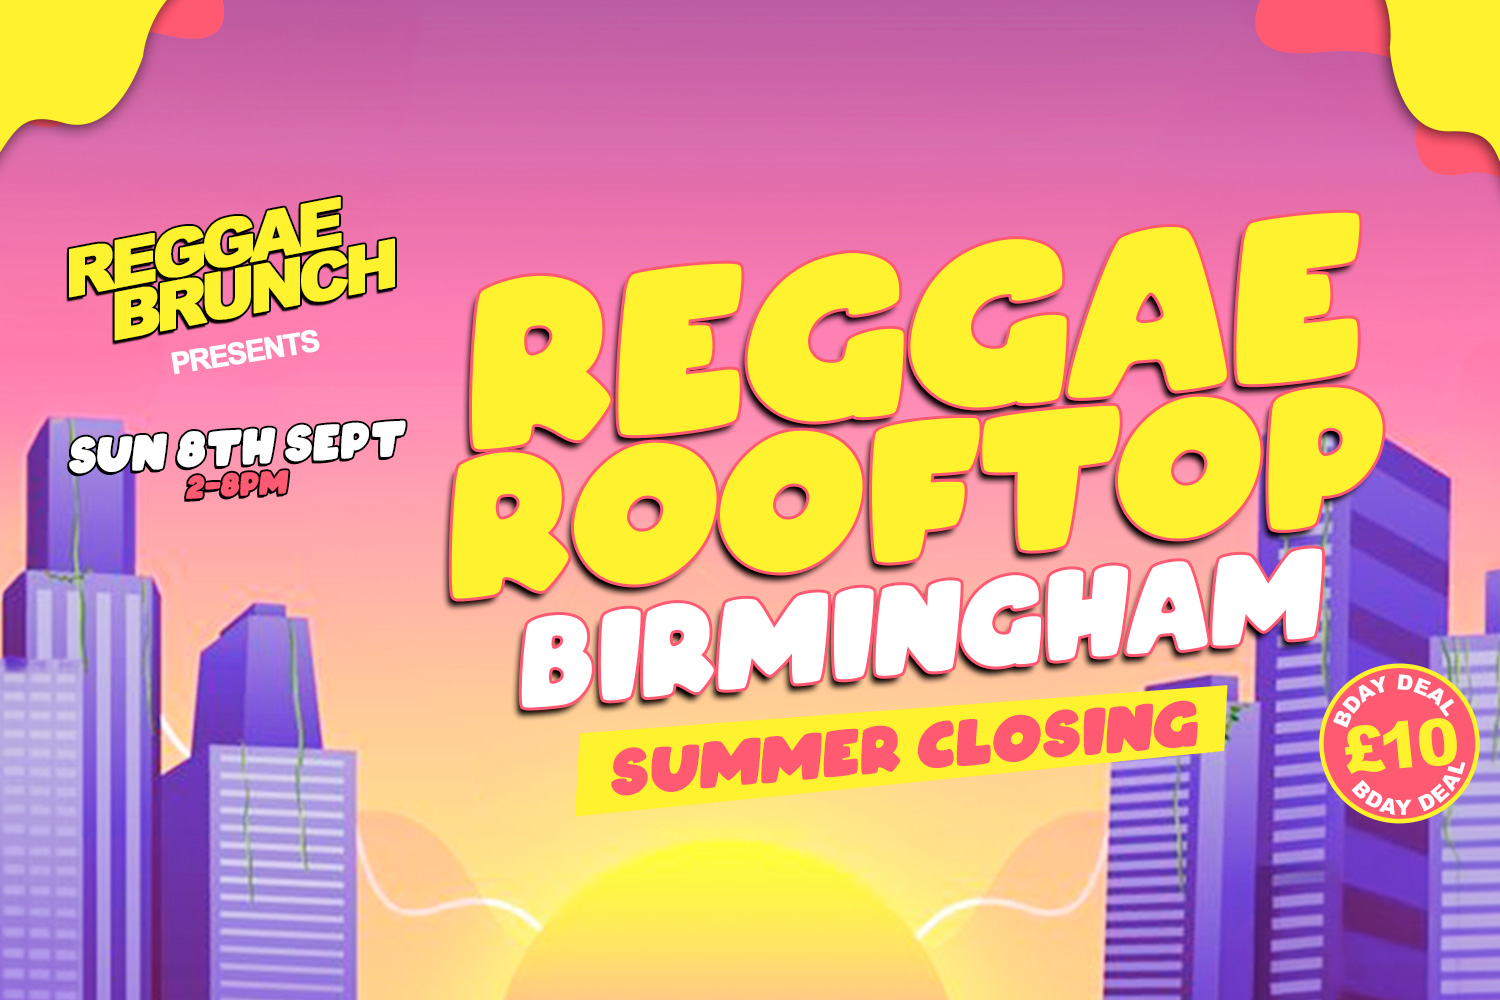 Sun,8th Sept | Reggae Rooftop